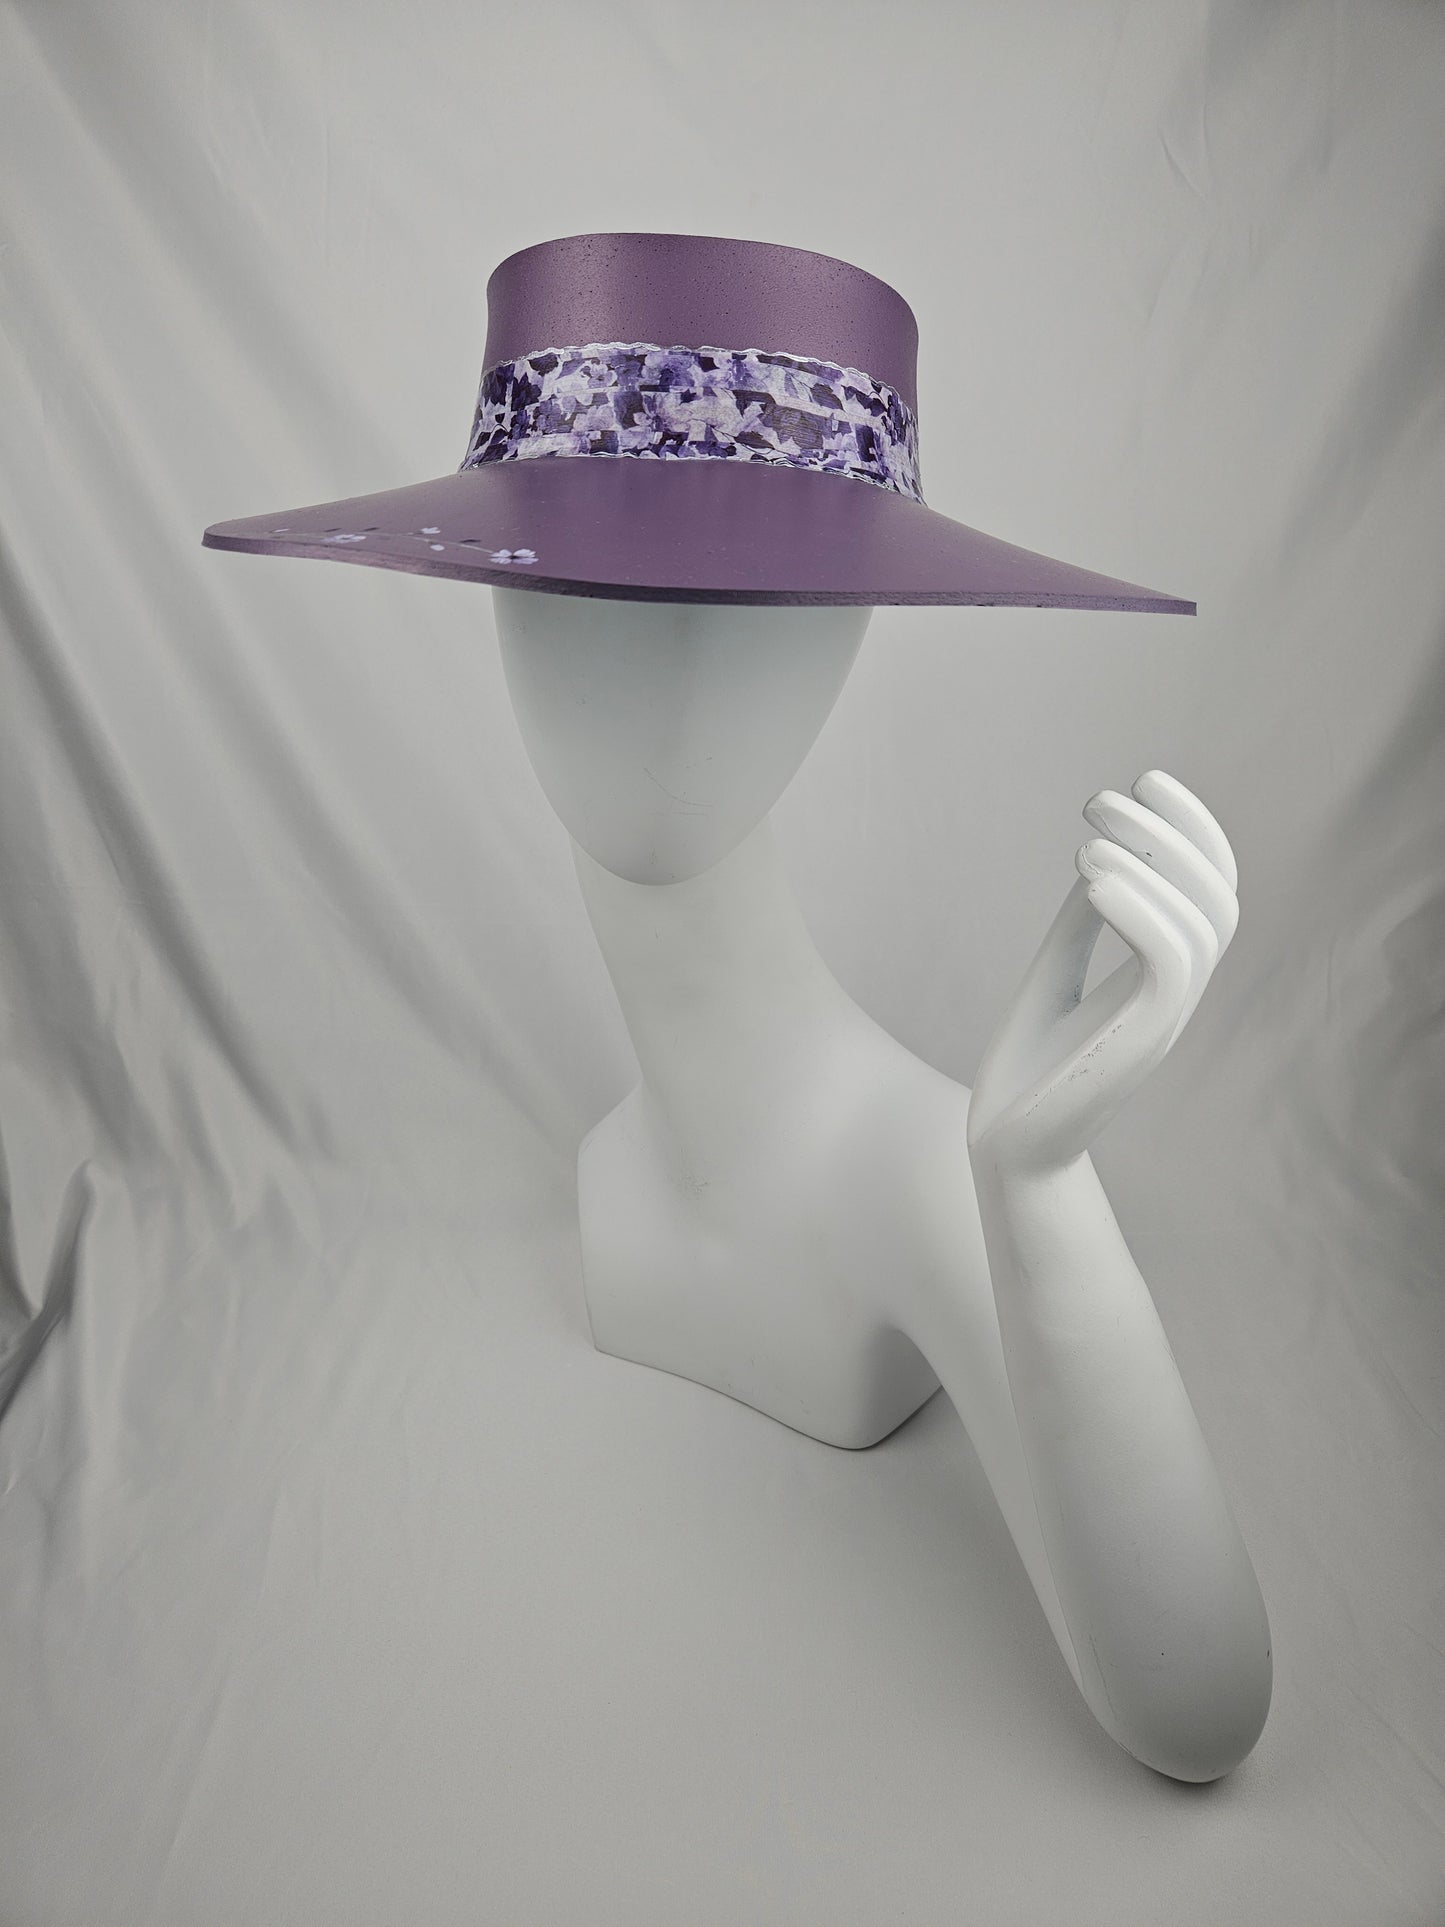 Trending Purple Audrey Foam Sun Visor Hat with Elegant Dark Purple Floral Band and Handpainted Floral Motif: Church, Brunch, Derby, Garden, Beach, Pool, Asian, No Headache